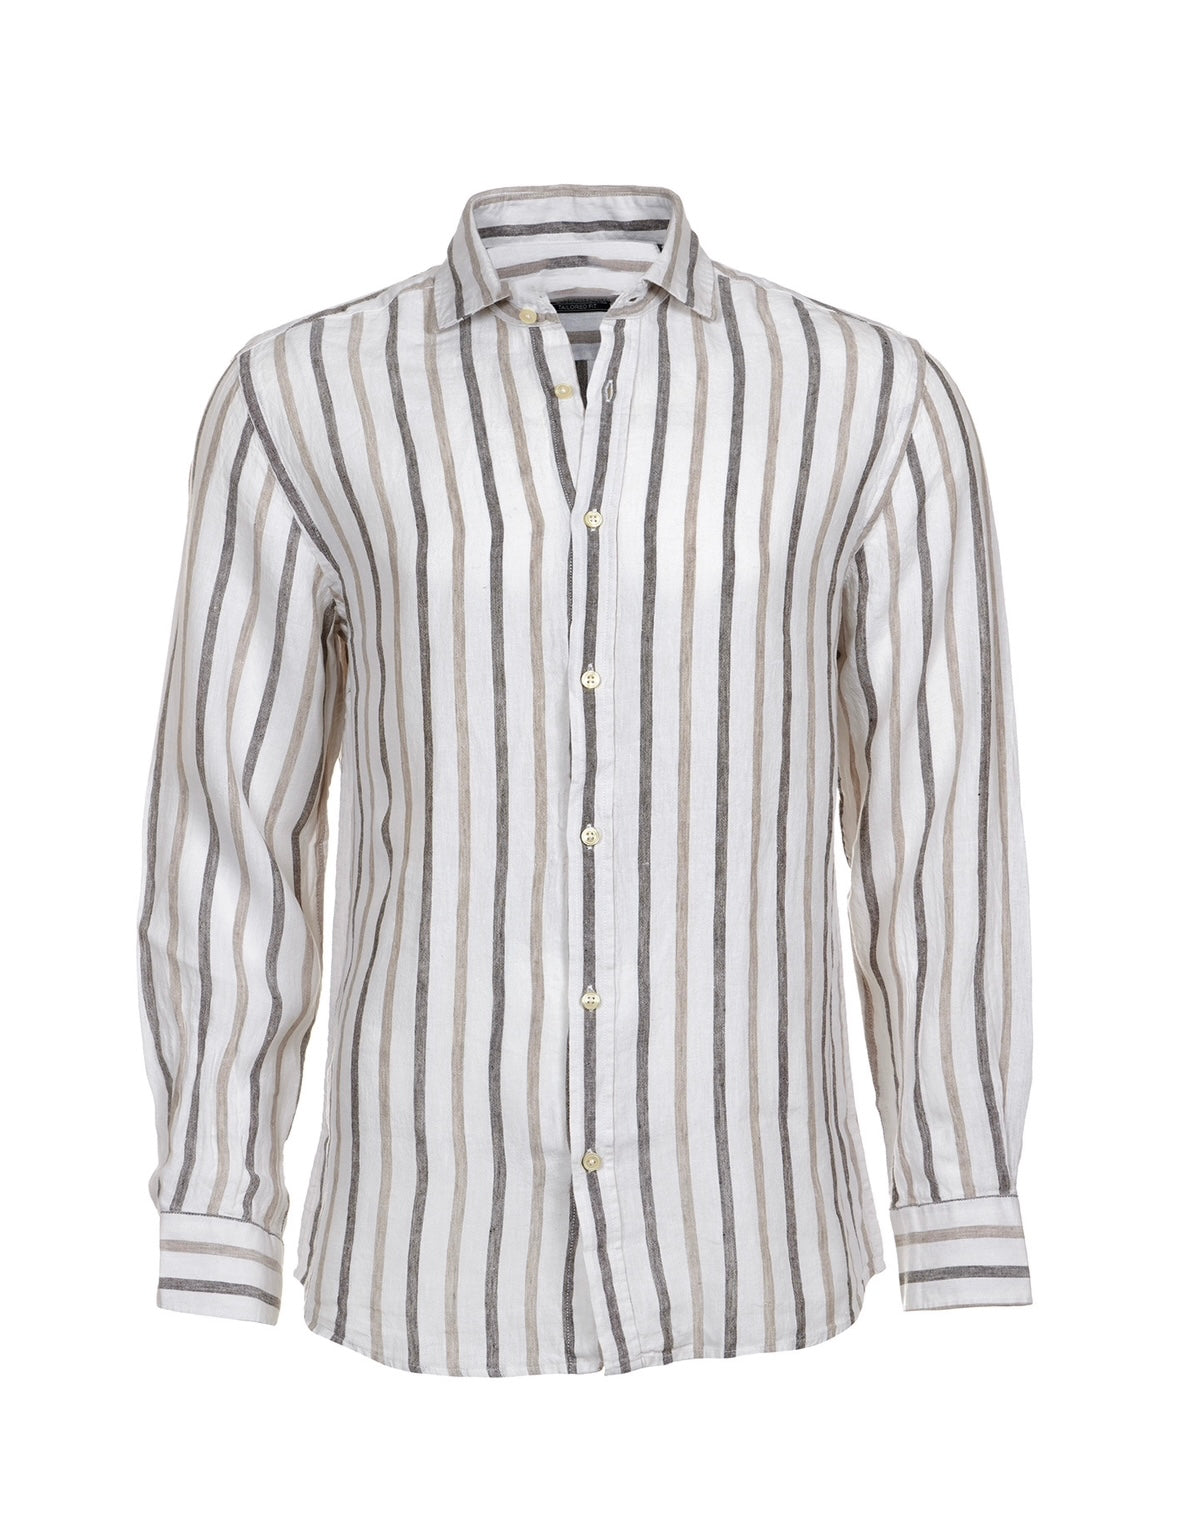 Brunelli Huntington shirt - Brown Stripe